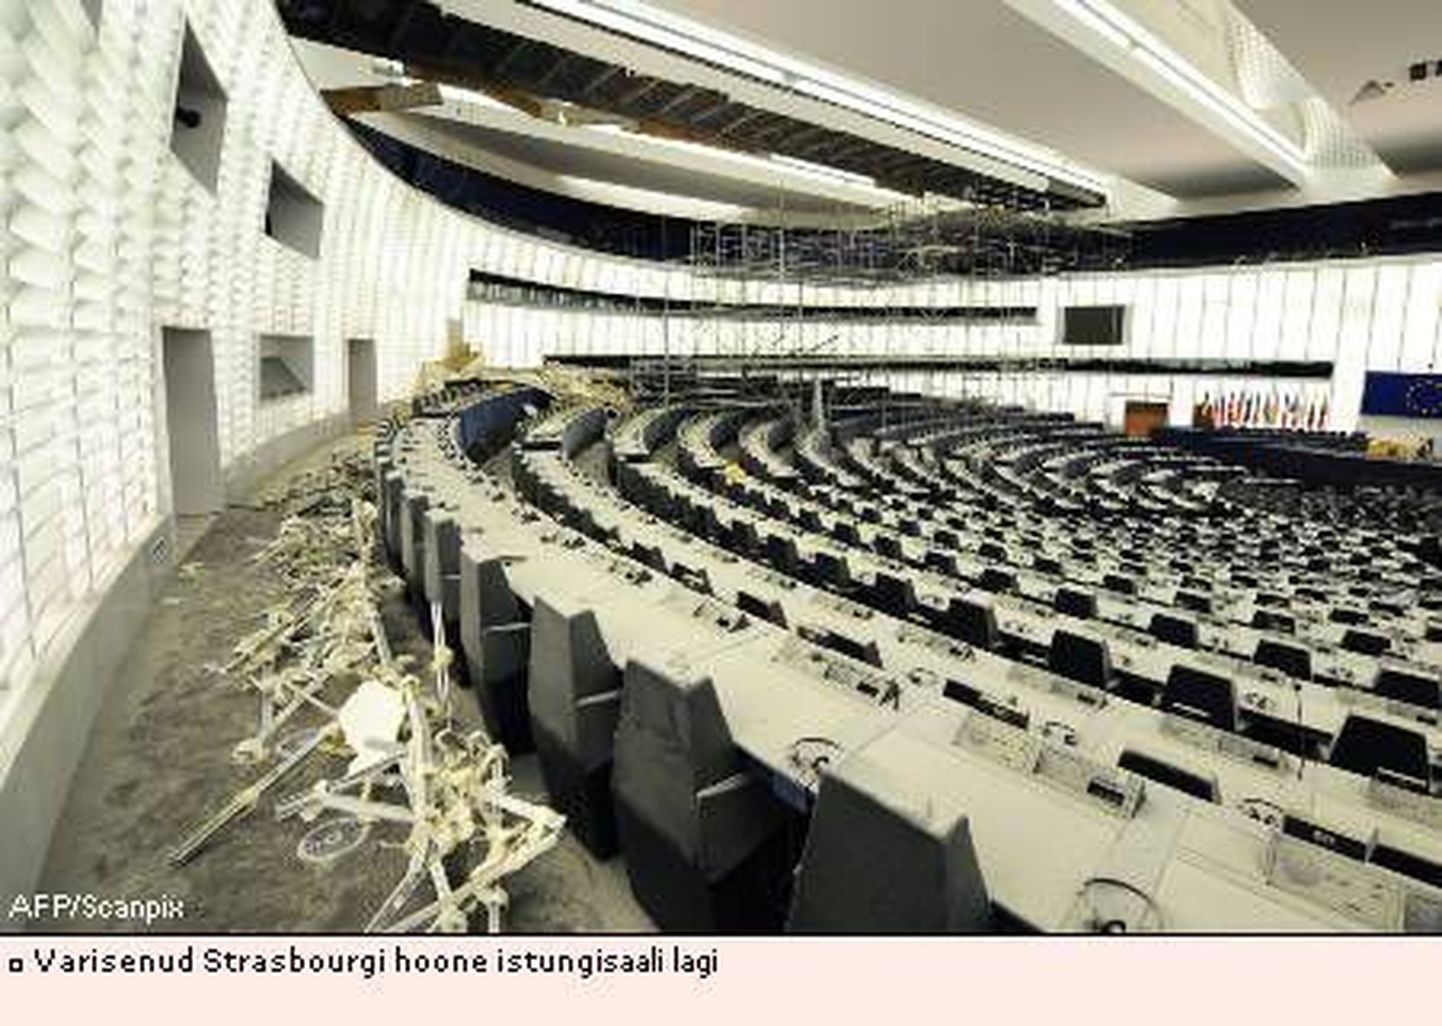 Strasbourgis asuva Euroopa Parlamendi hoone sissevarisenud lagi.